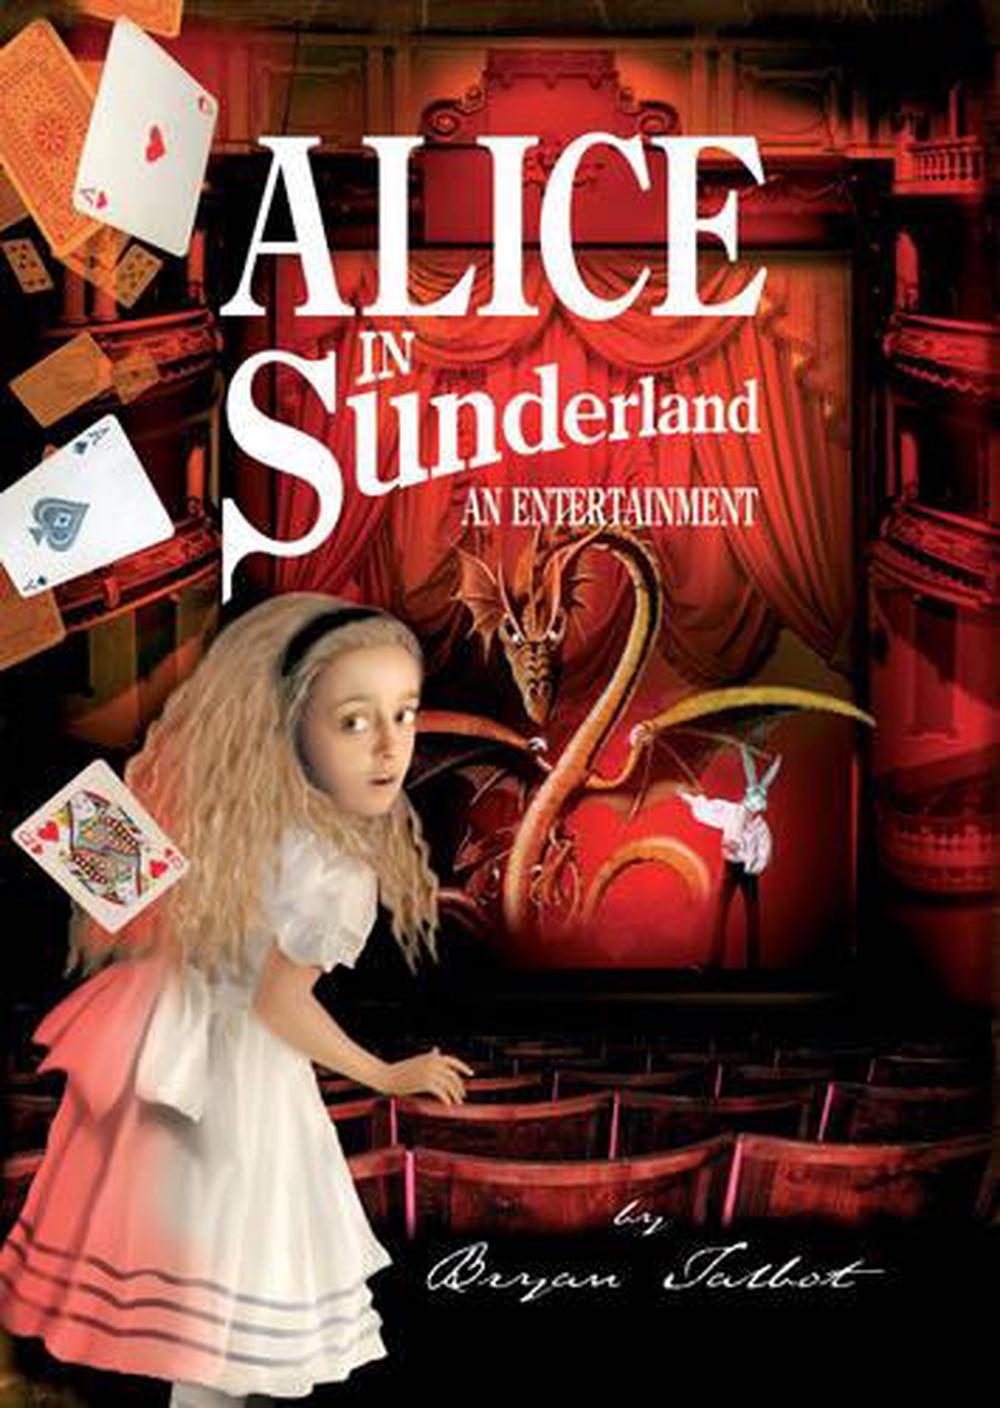 Alice in Sunderland by Bryan Talbot